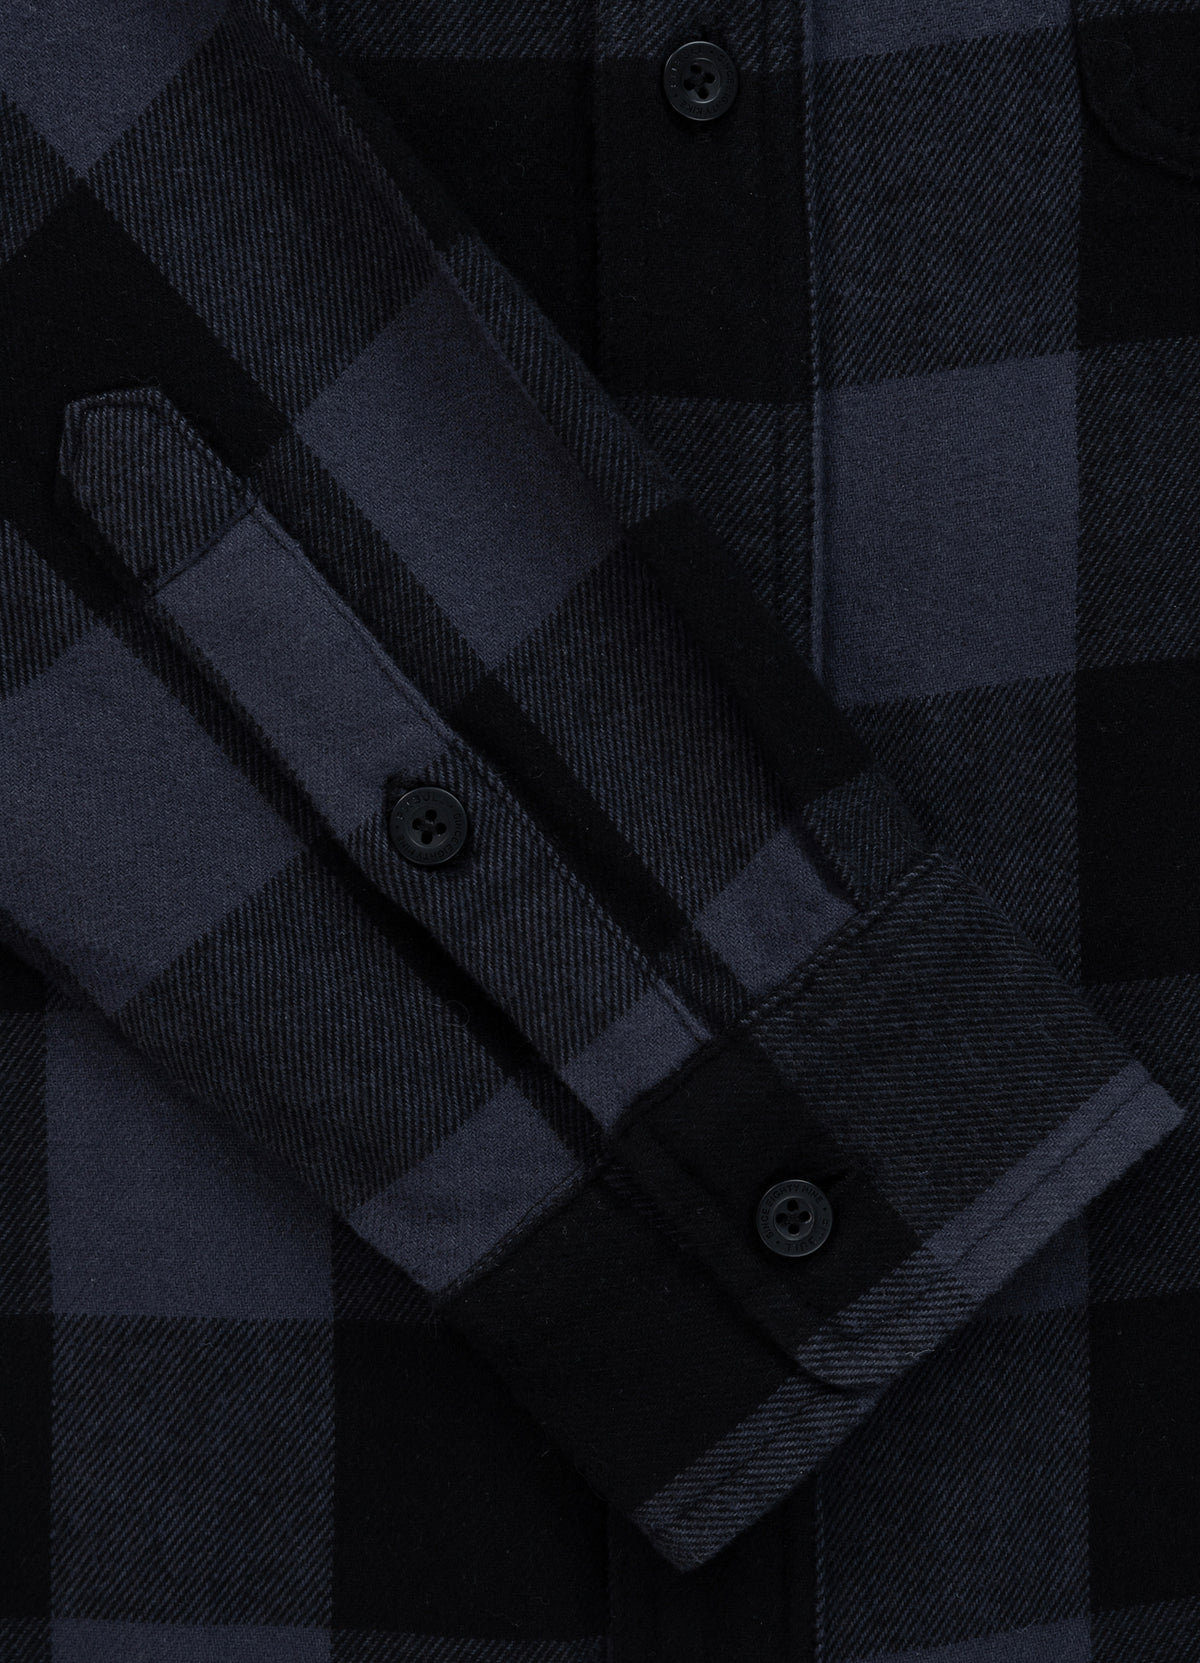 WOODSON Grey/Black Hooded Flannel Shirt